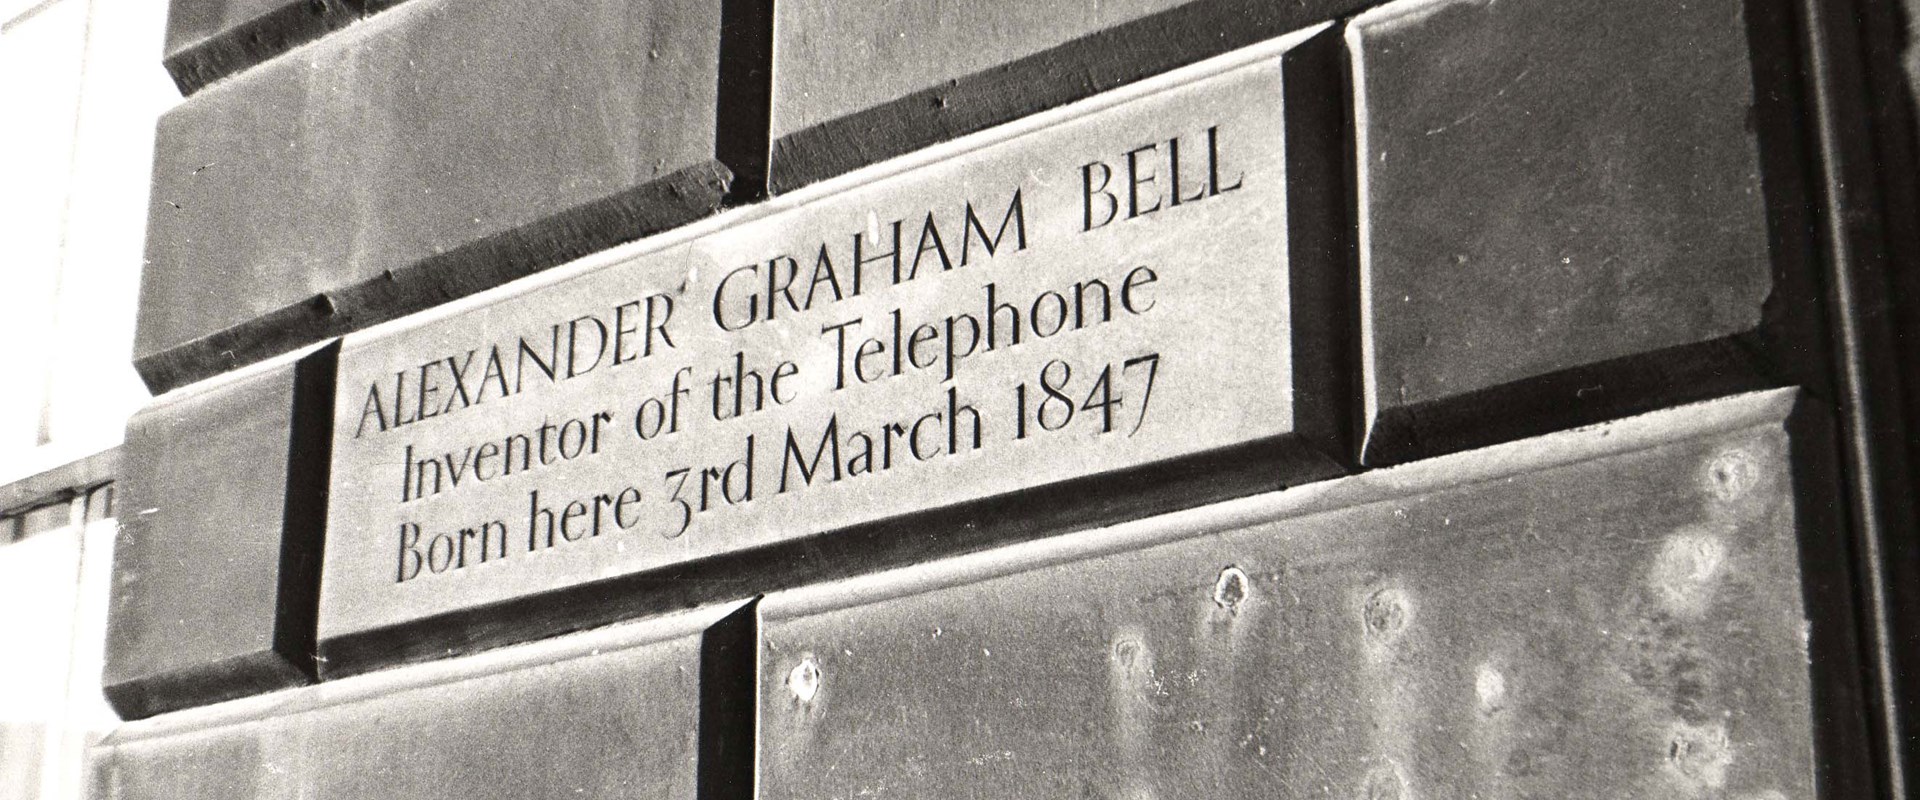 Alexander Graham Bell's box telephone